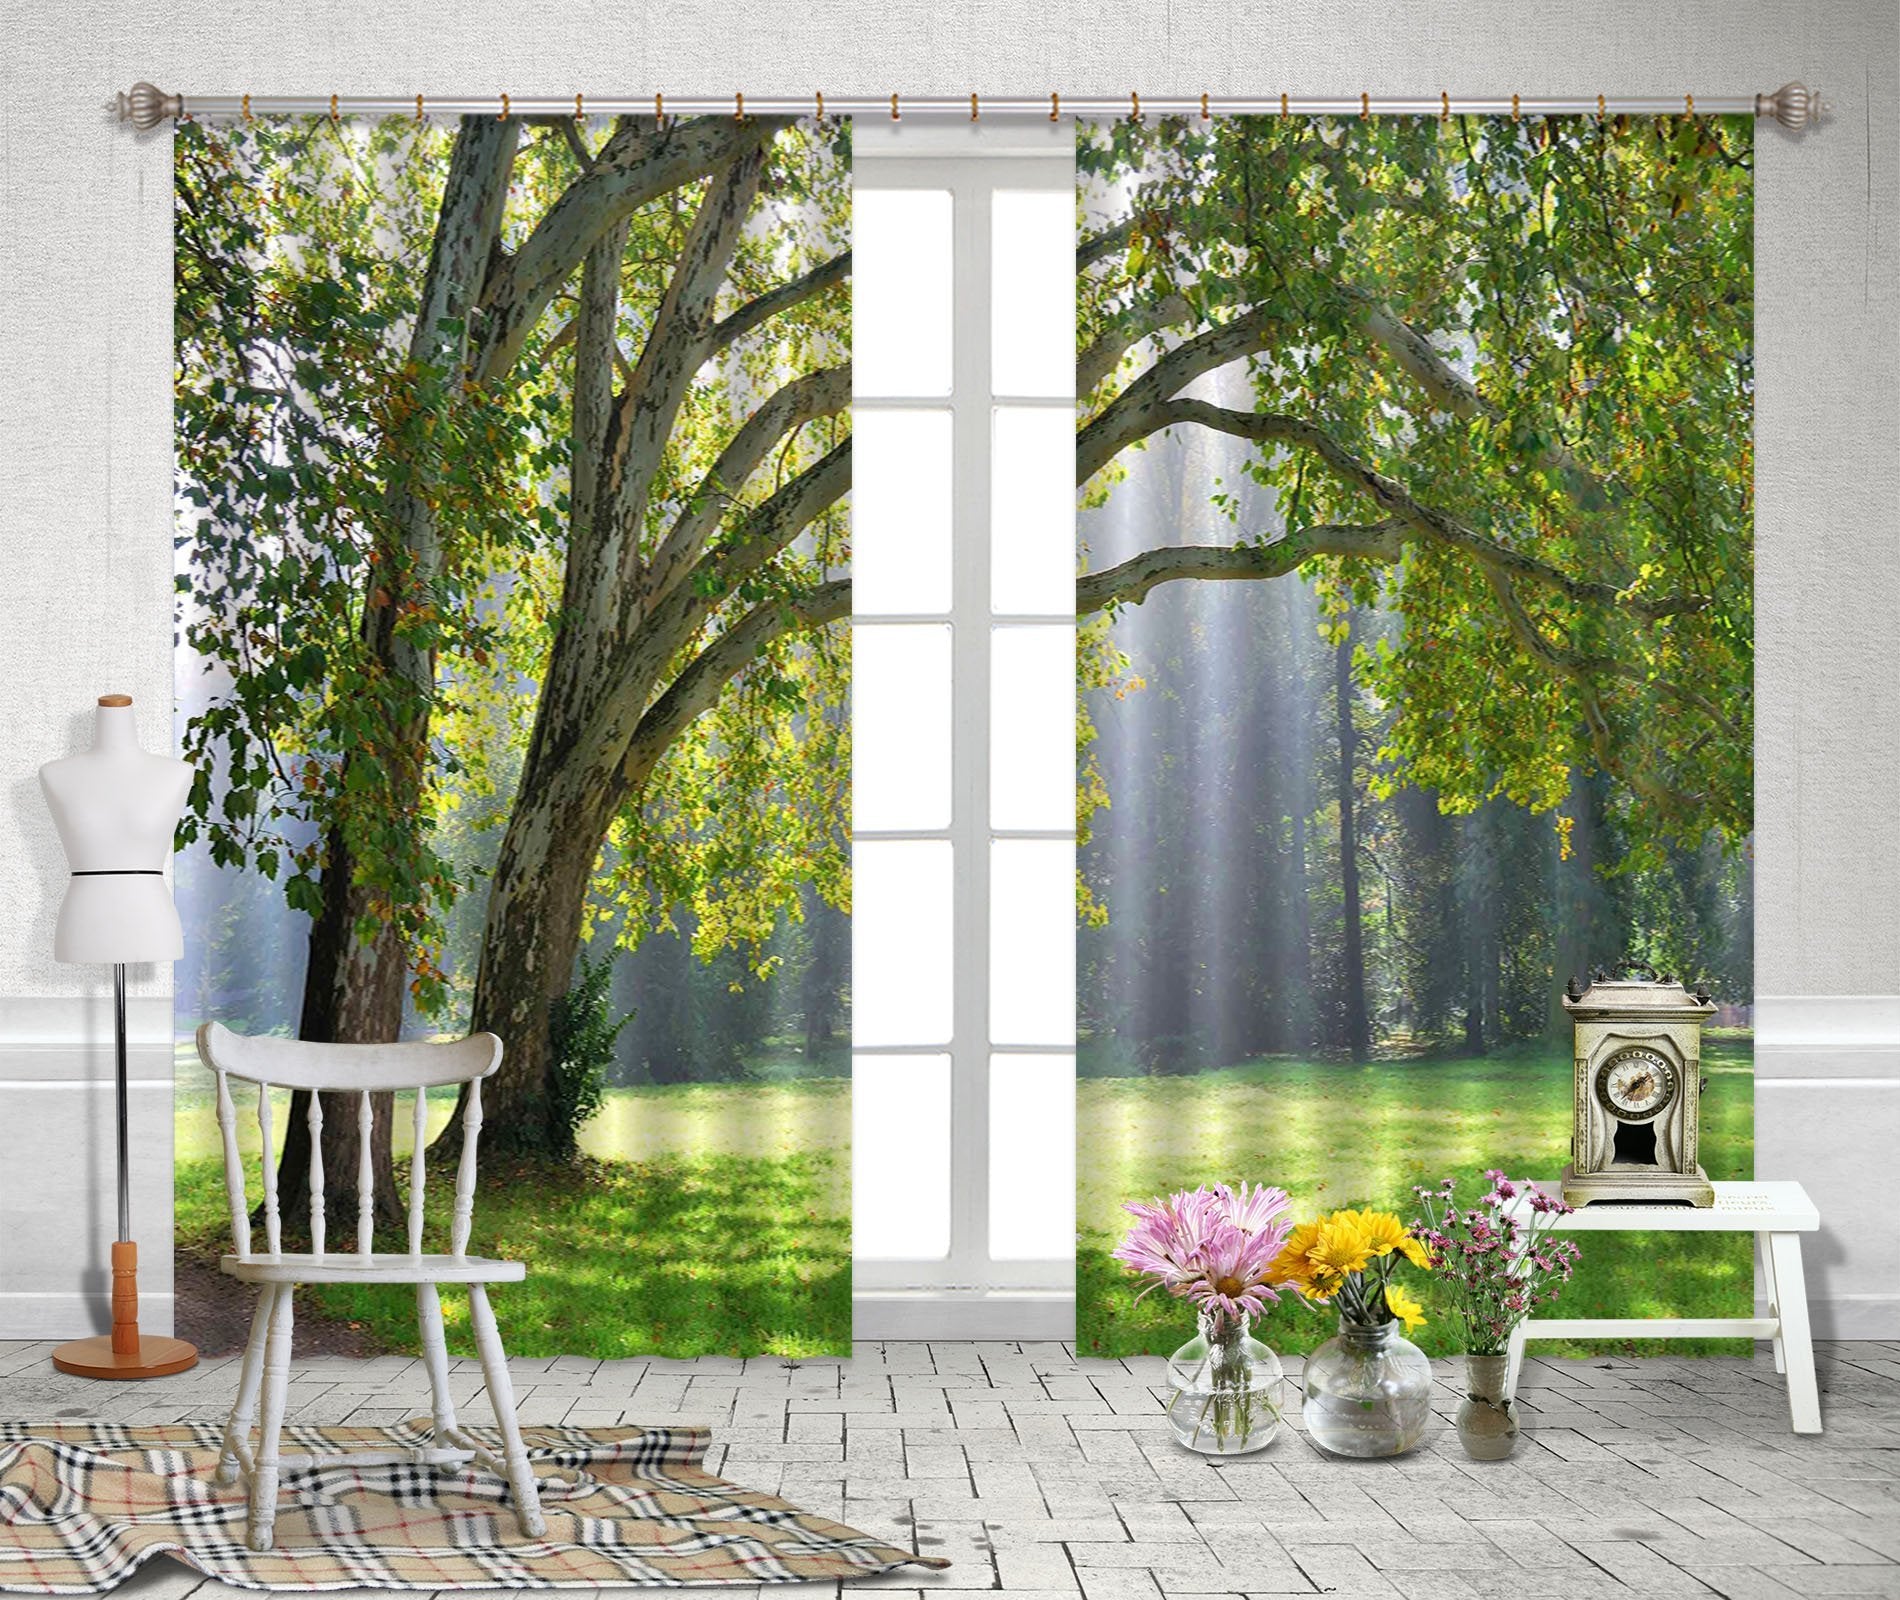 3D Green Grassland Trees 2237 Curtains Drapes Wallpaper AJ Wallpaper 